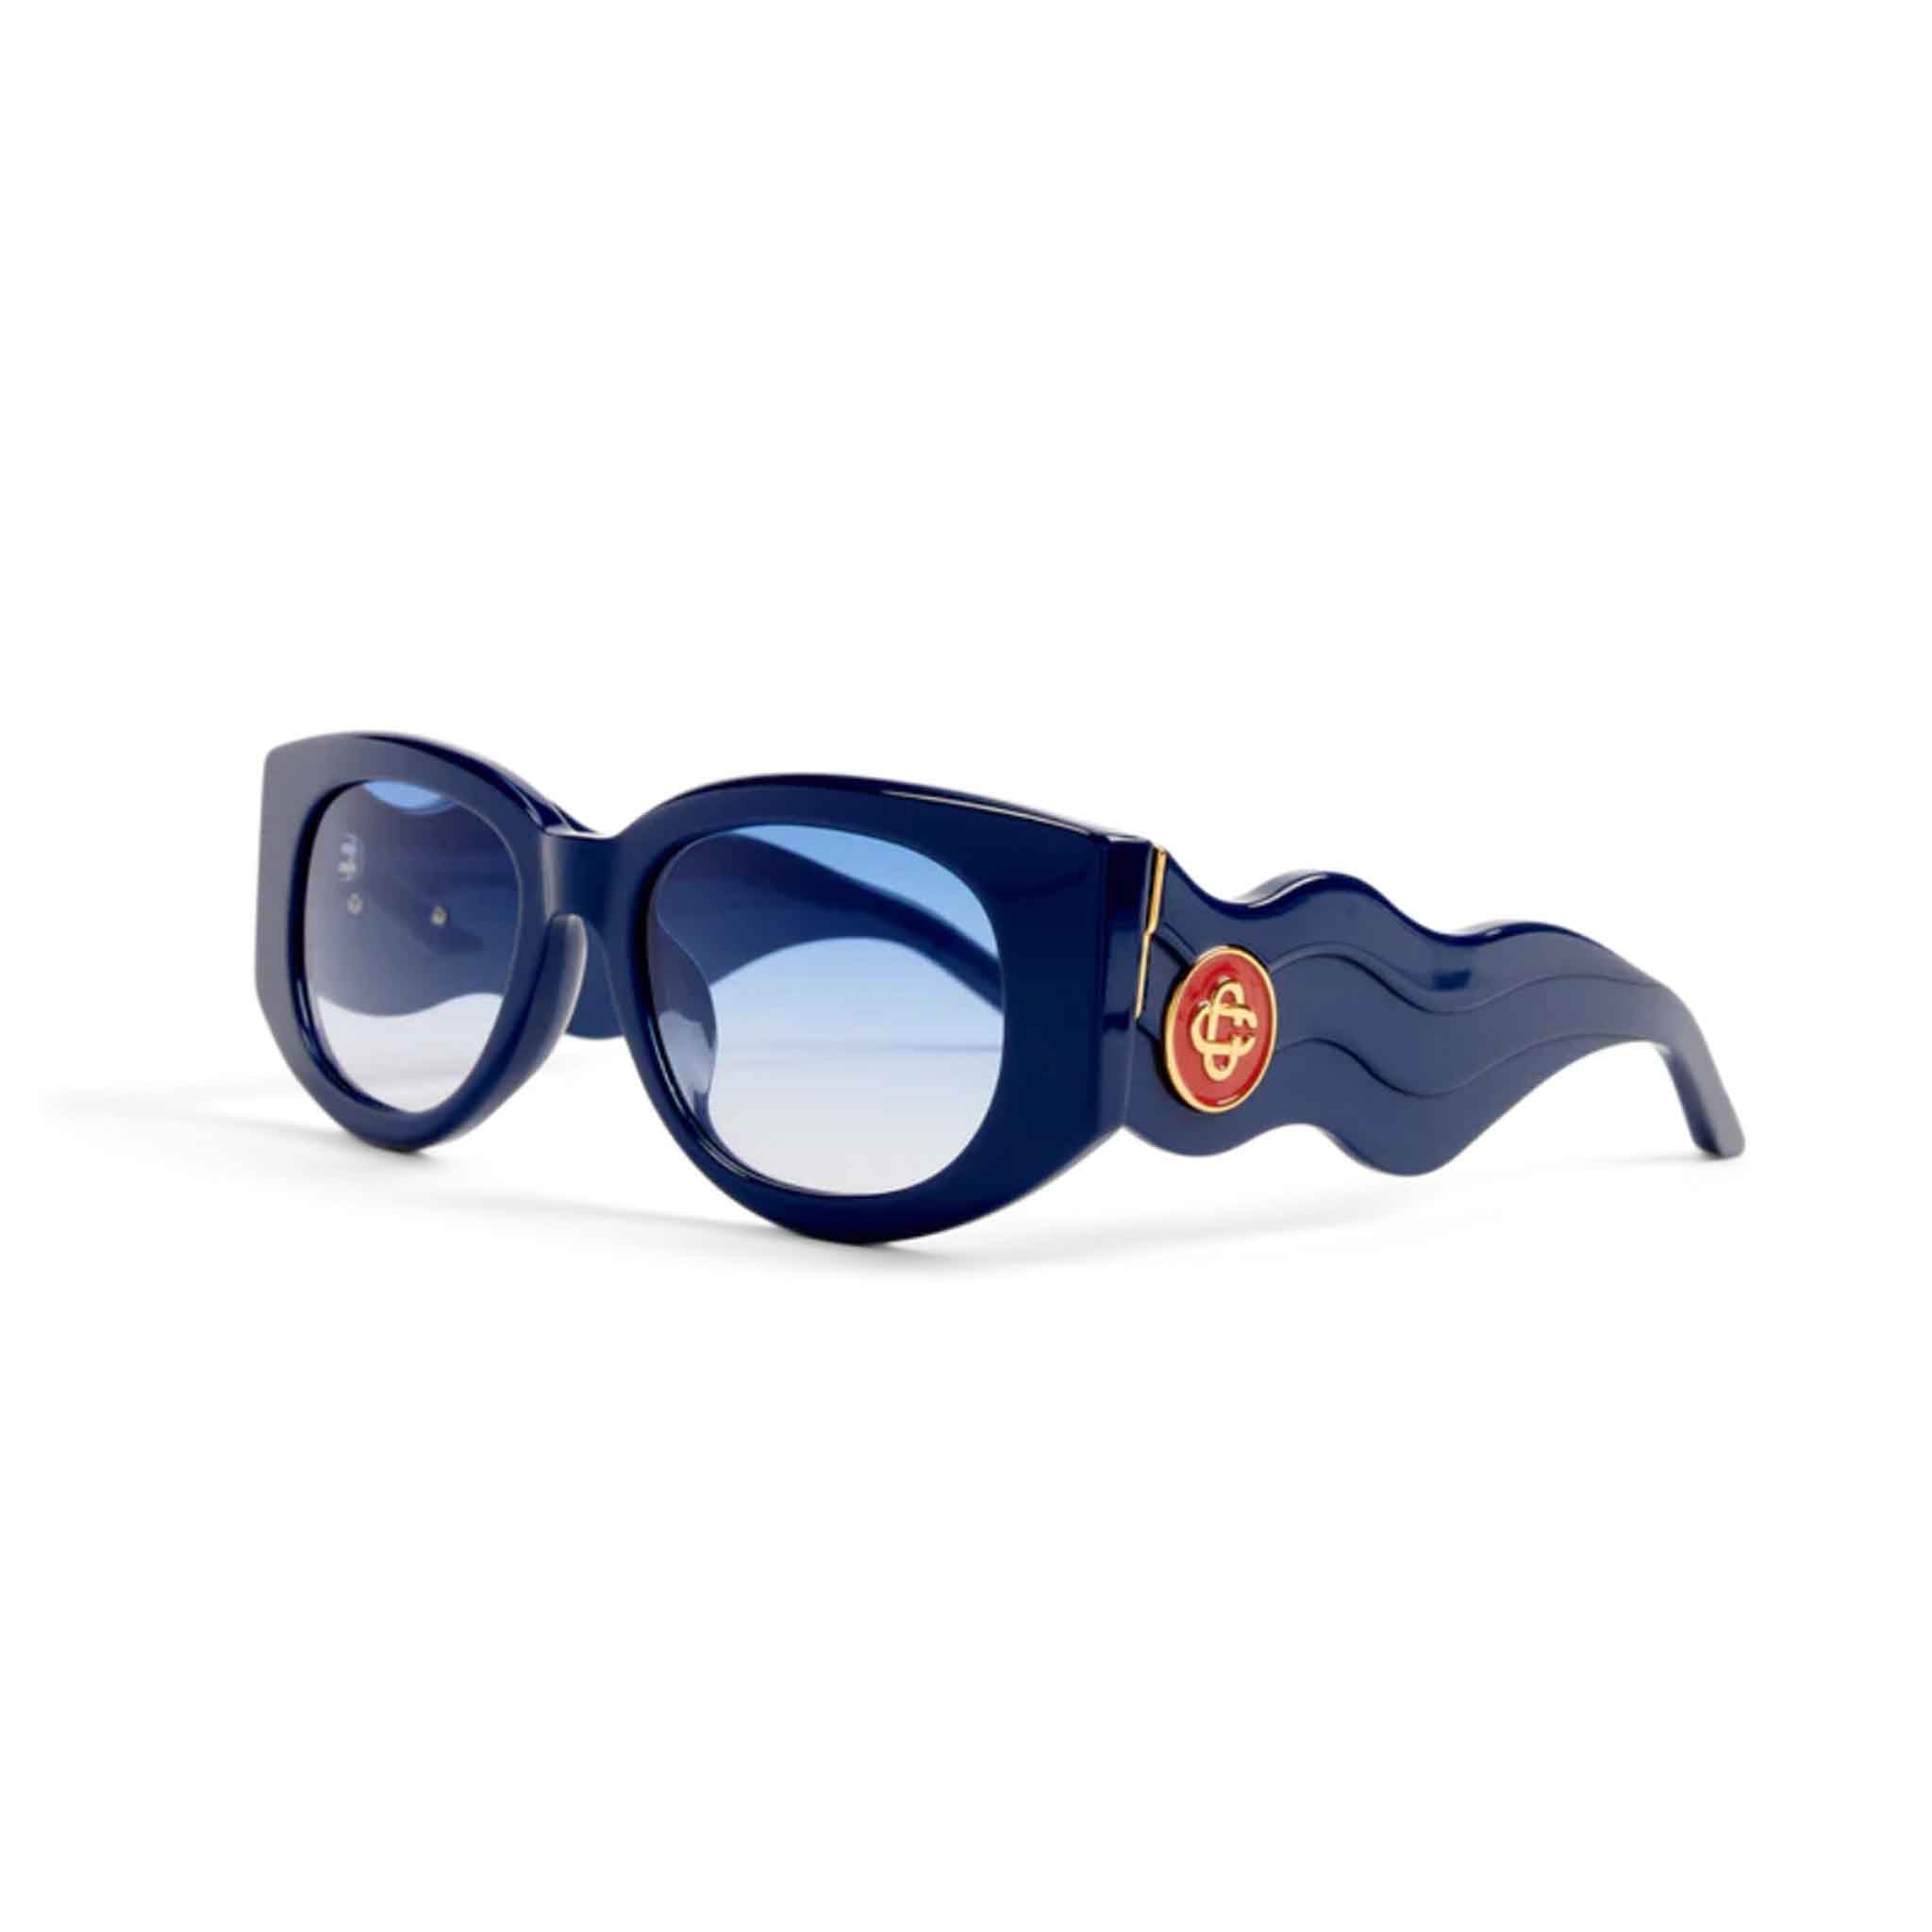 Casablanca Acetate & Metal Wave Oval Sunglasses in Blue/Gold